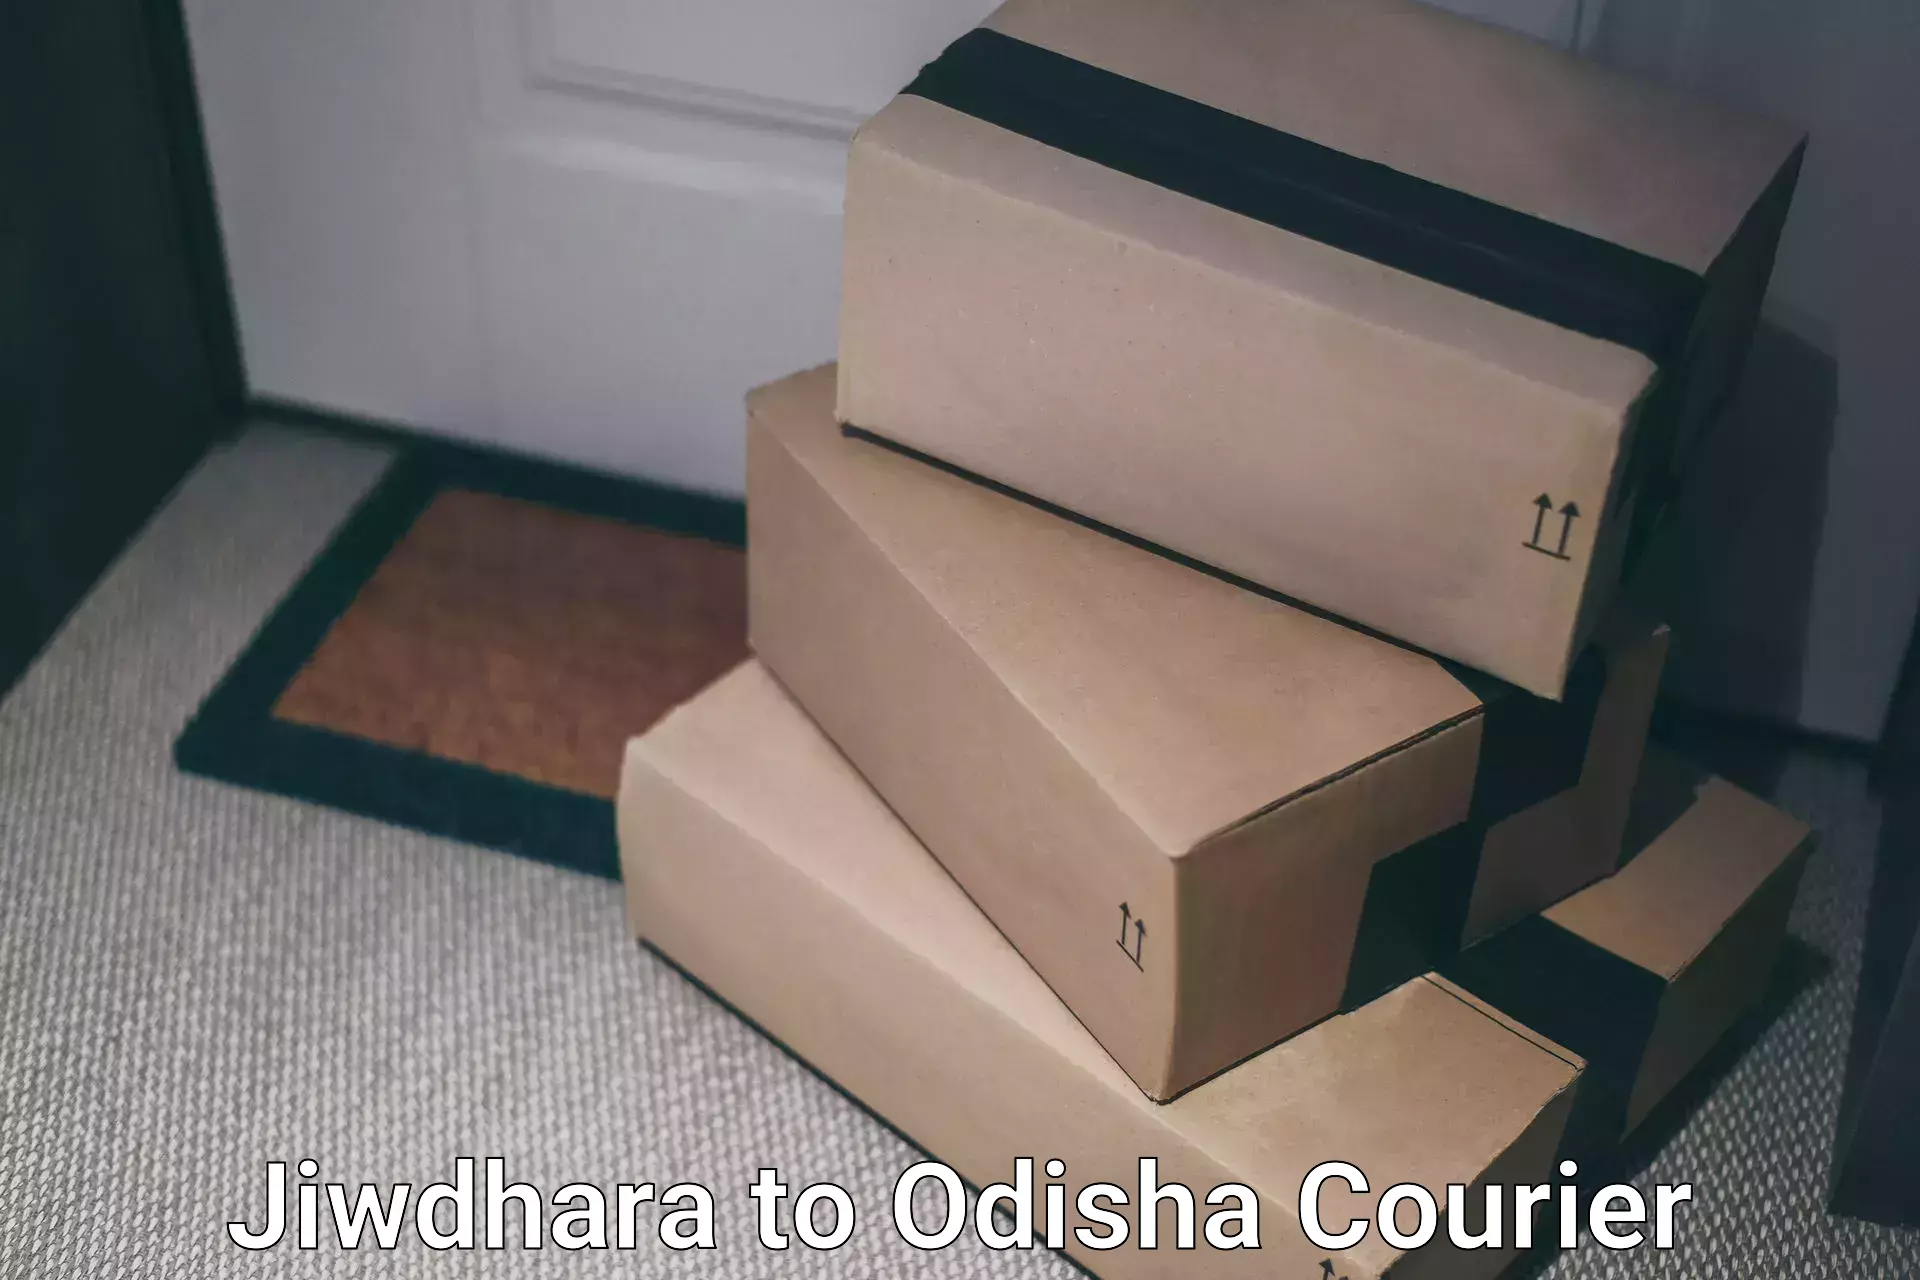 Courier service comparison Jiwdhara to Baripada